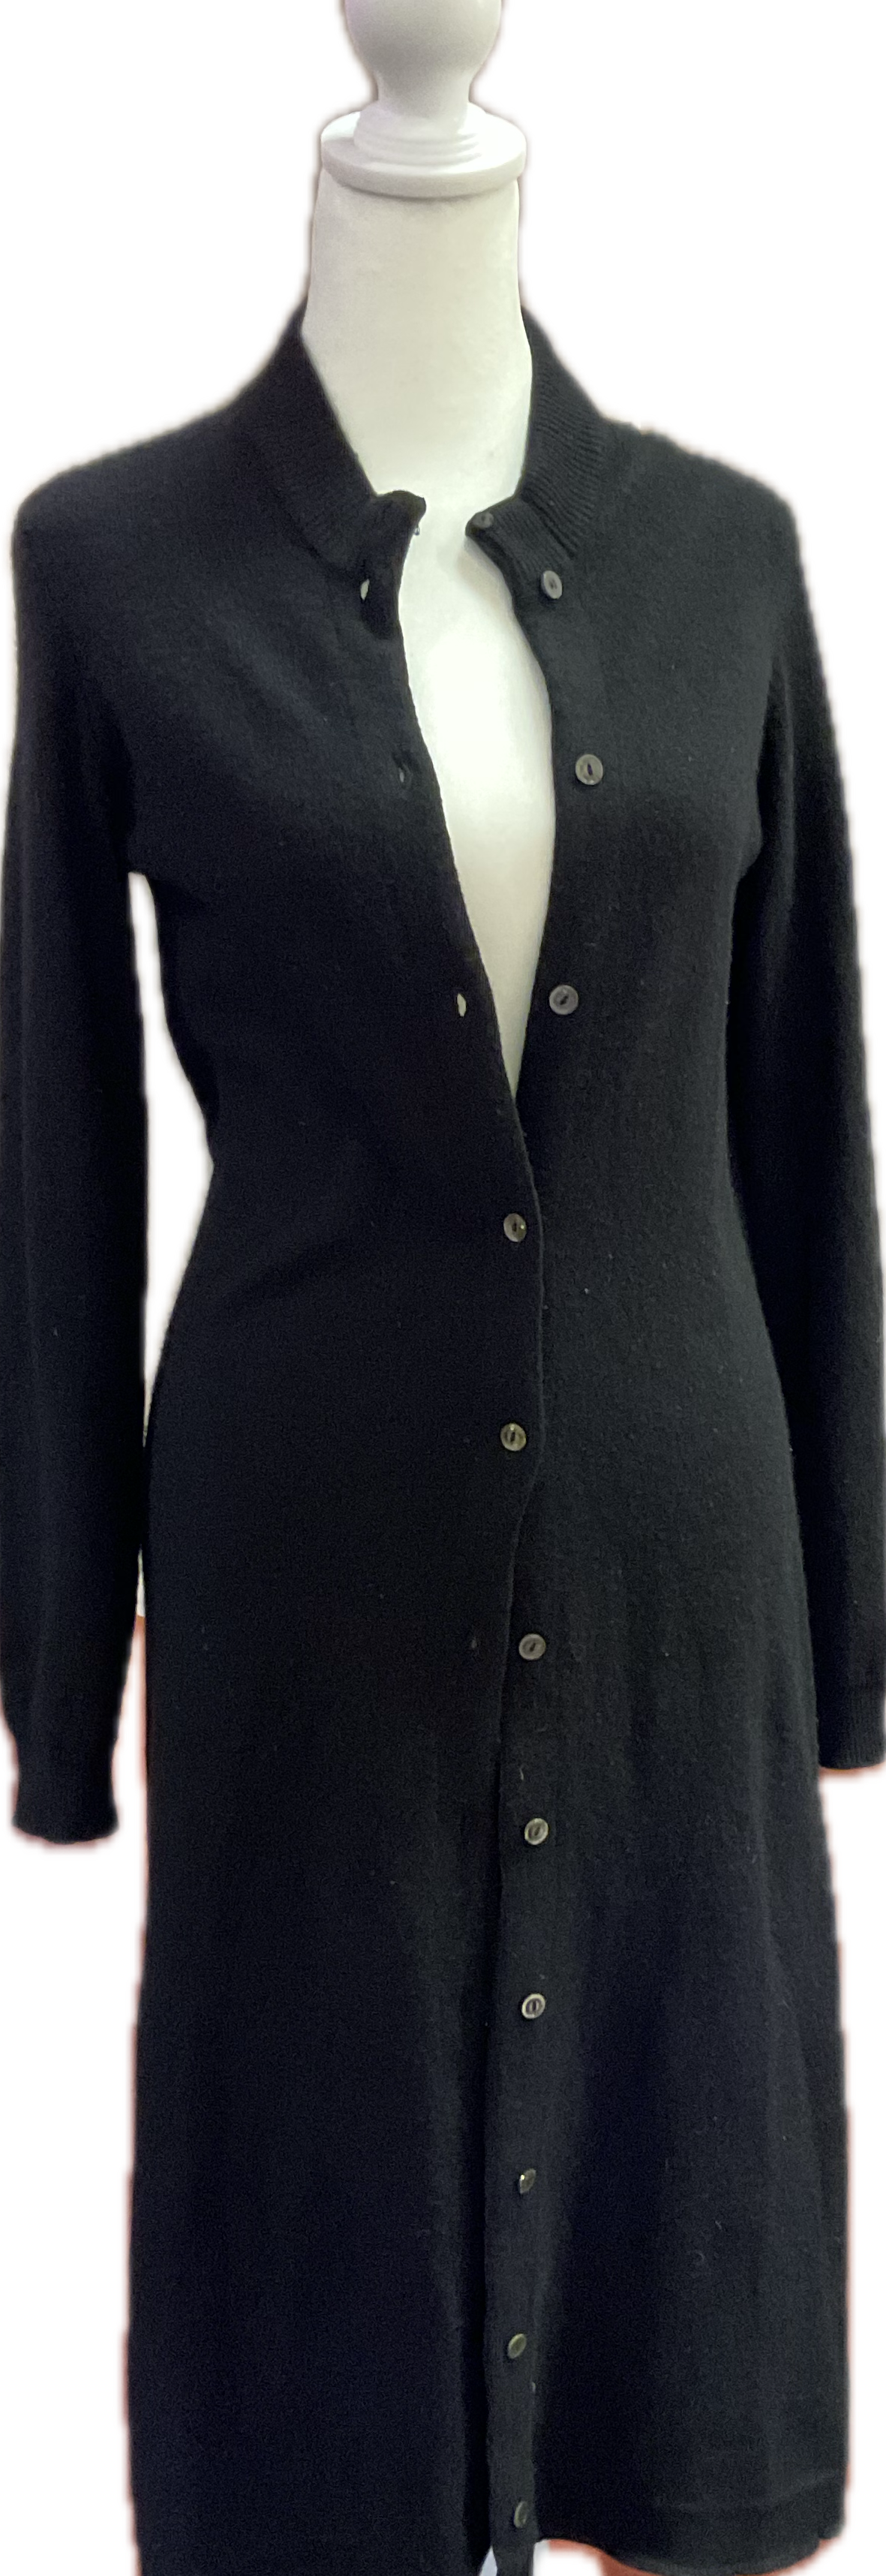 Vintage Long Black Cardigan